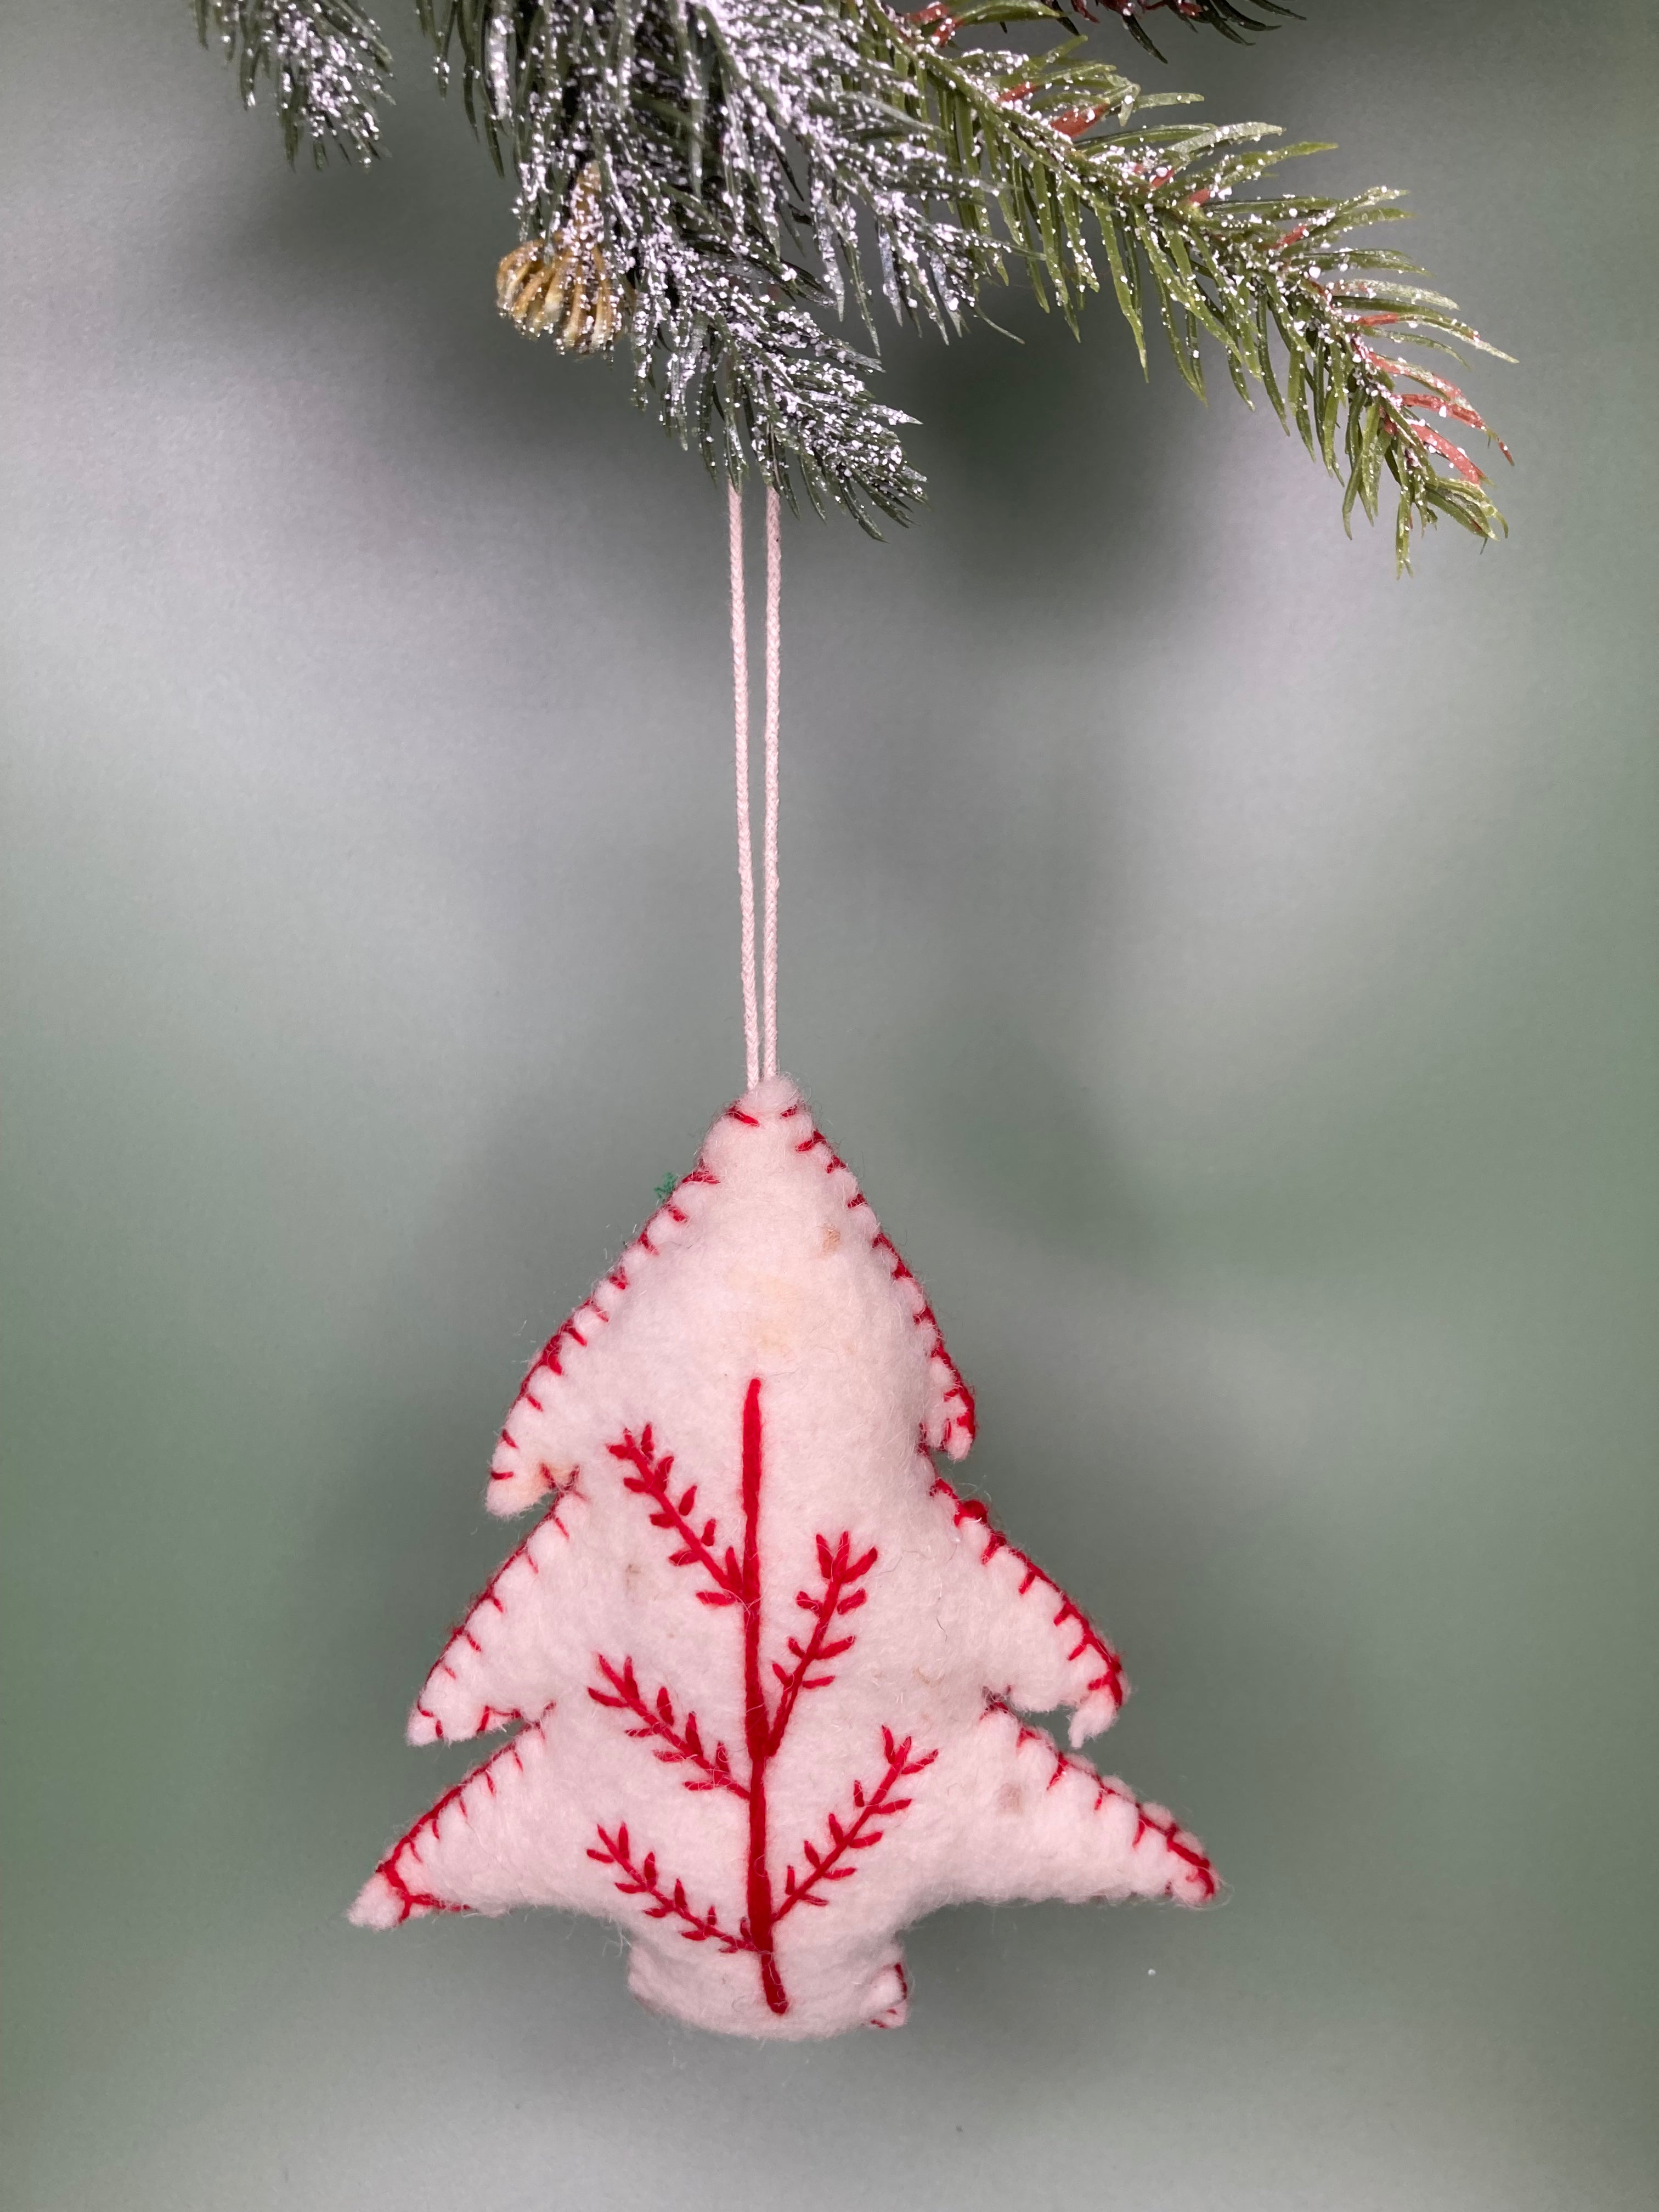 Sprig Stitched Xmas Tree Ornament